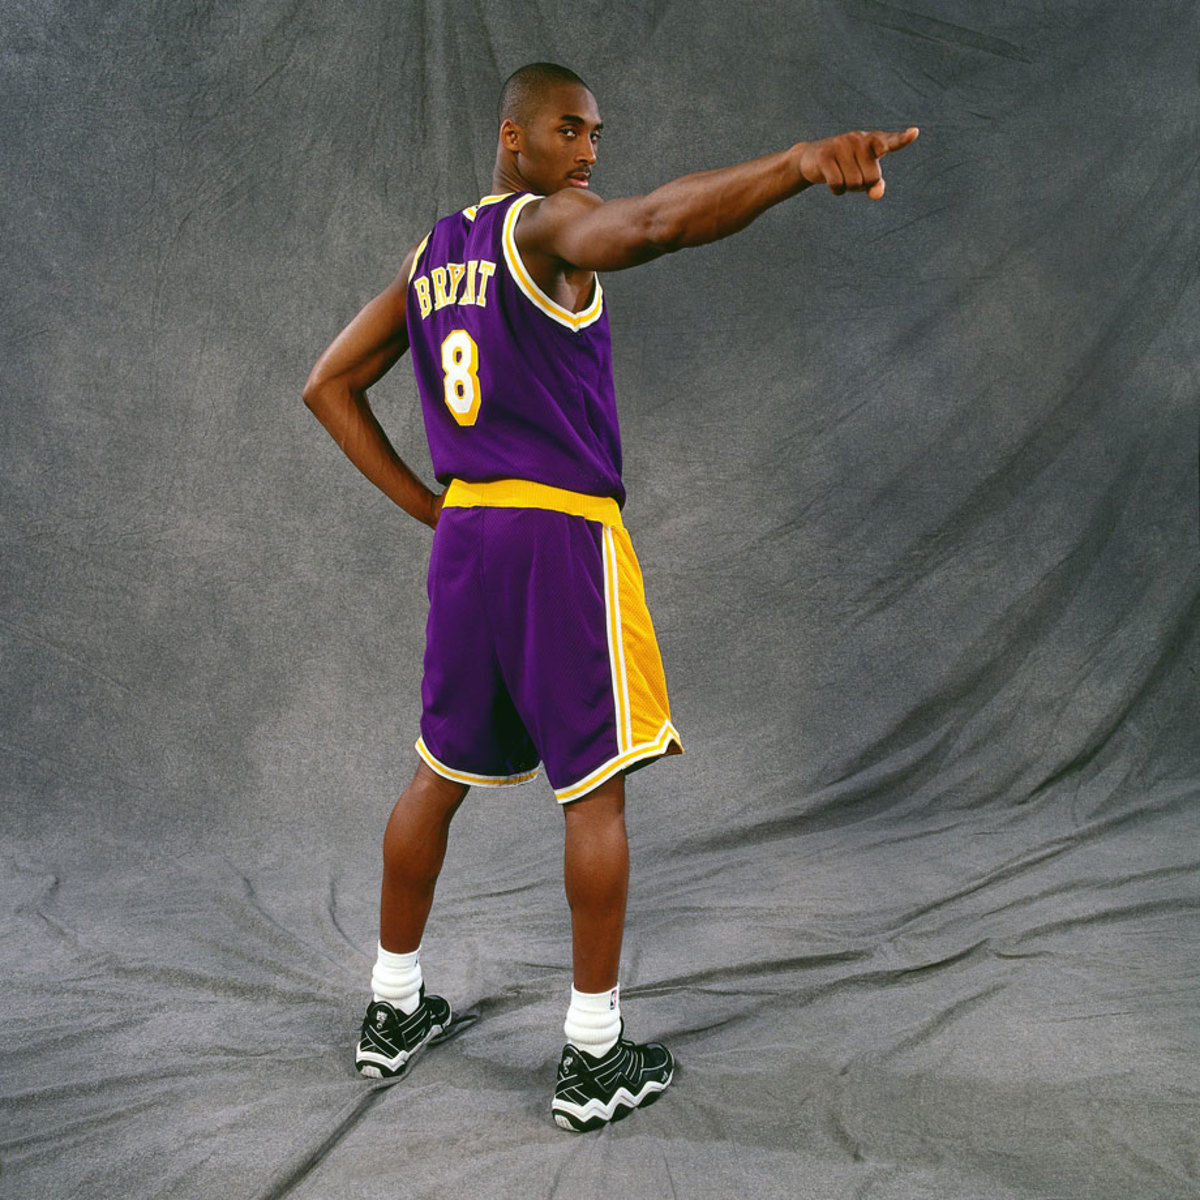 KOBE BRYANT  Los Angeles Lakers 1997 Away Throwback NBA